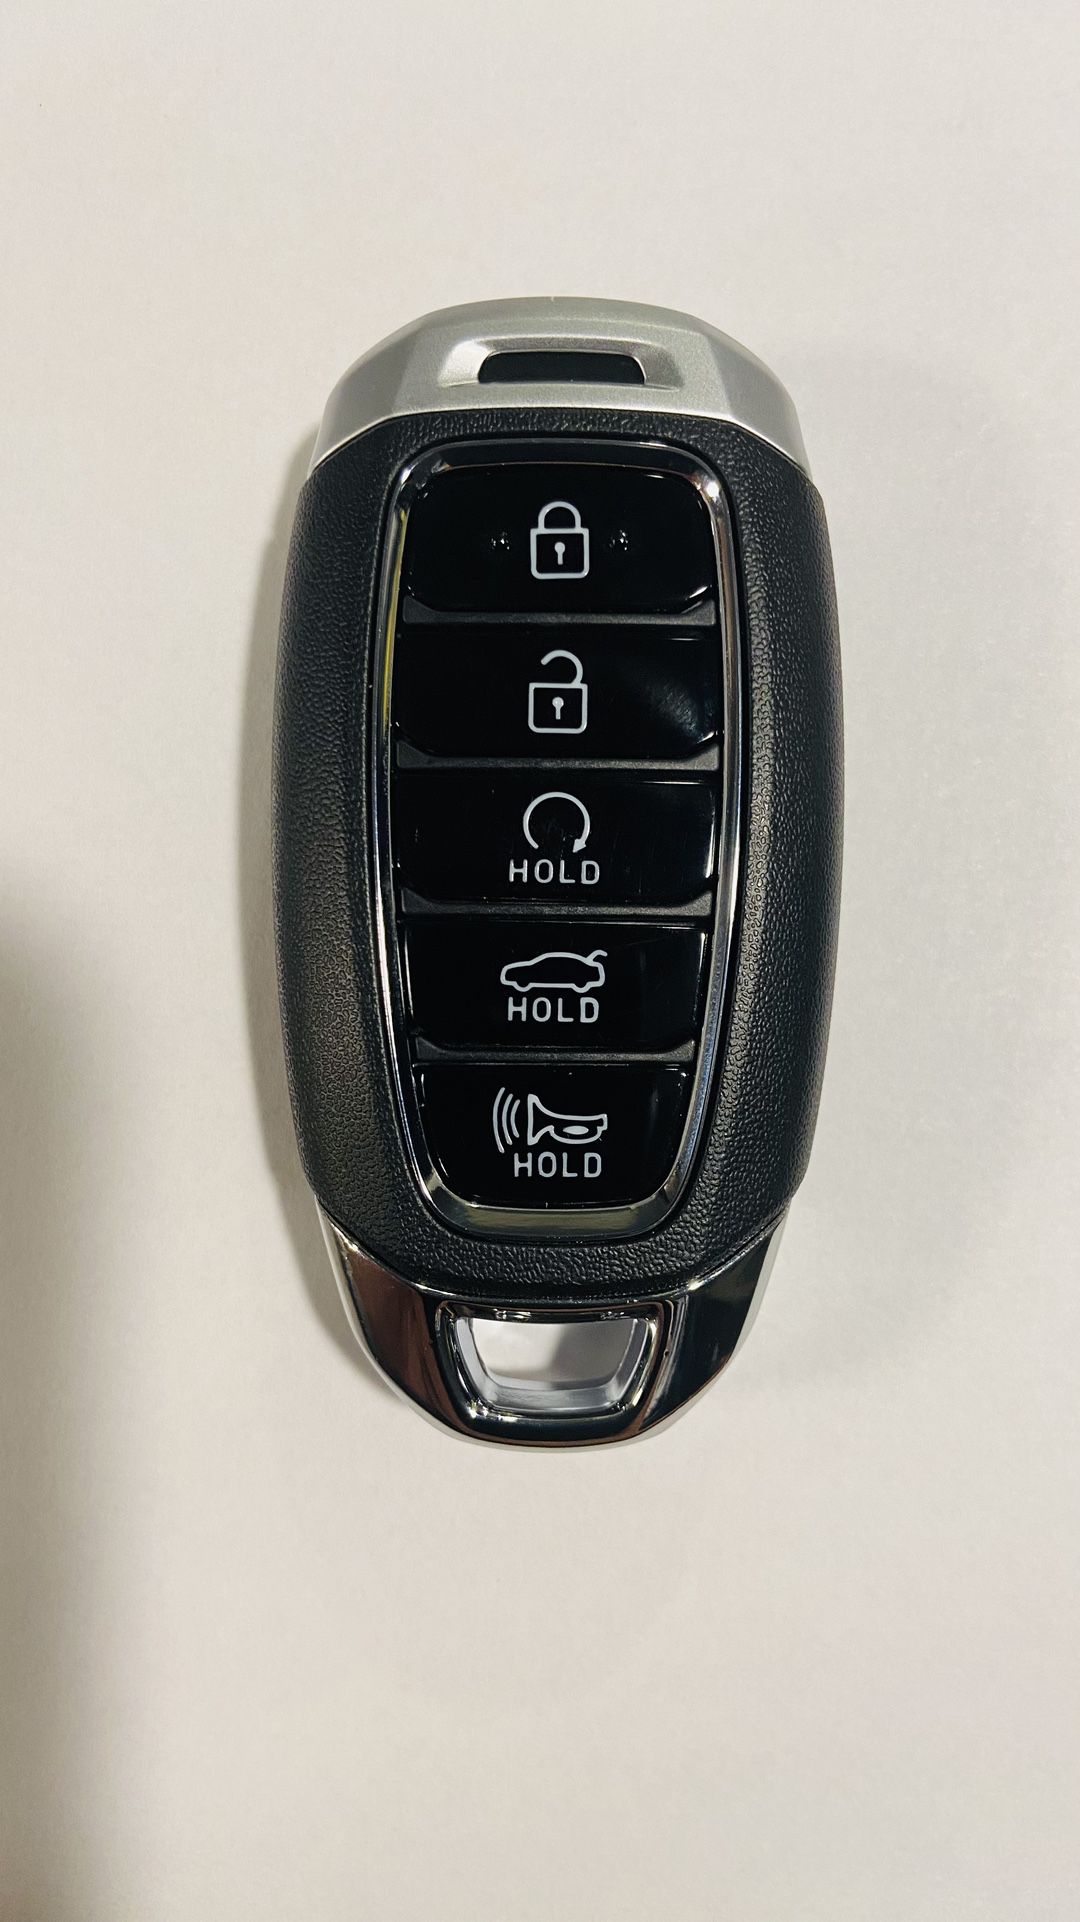 Smarty-Key for 2021 Hyundai Elantra